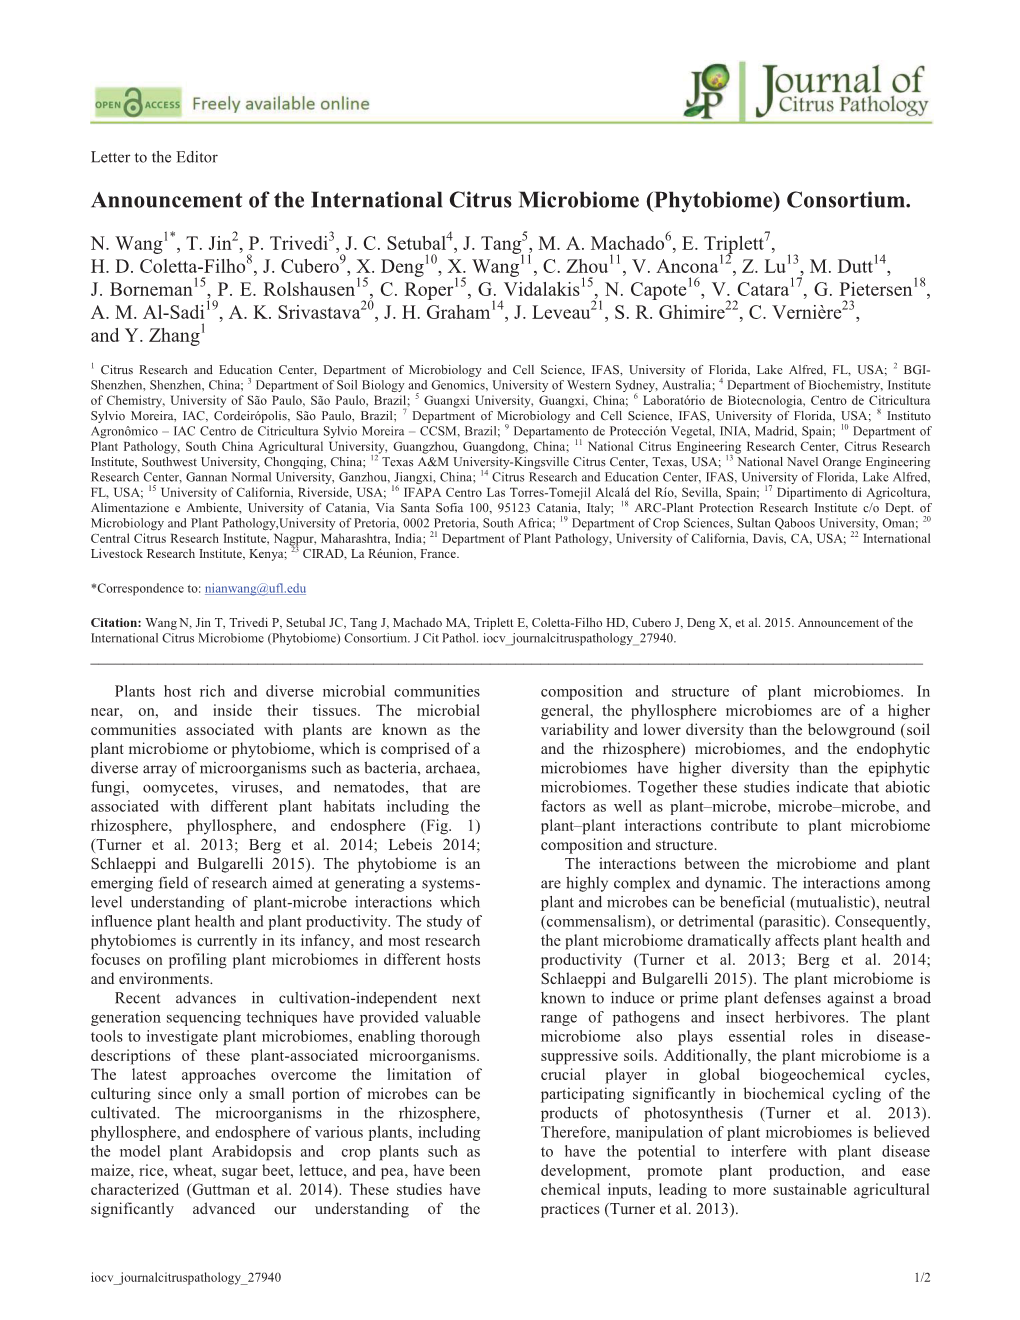 Announcement of the International Citrus Microbiome (Phytobiome) Consortium